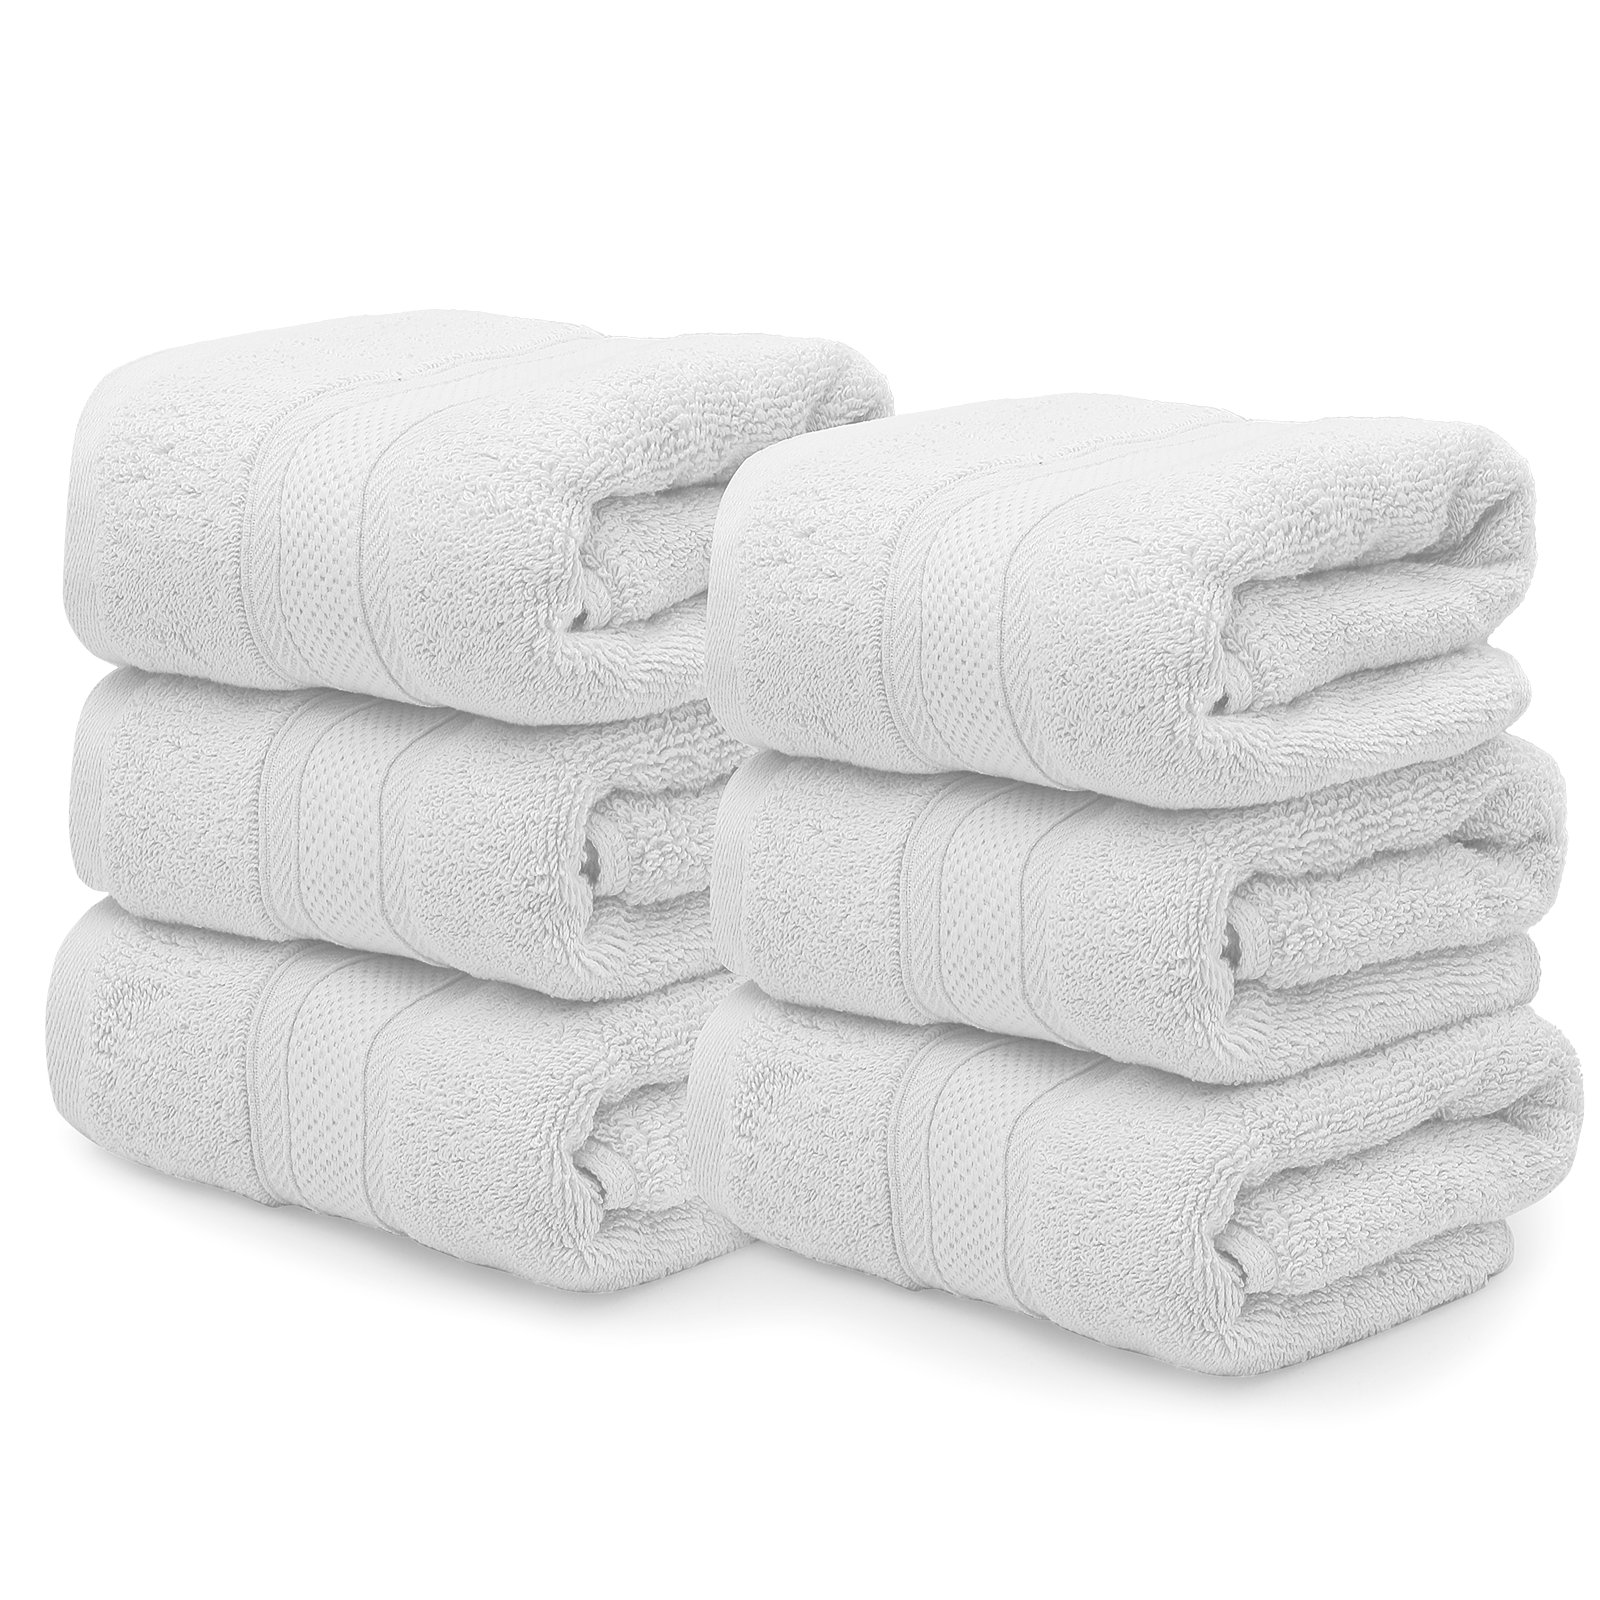 Superior 900GSM Egyptian Cotton 6-Piece Towel Set White 900GSM 6